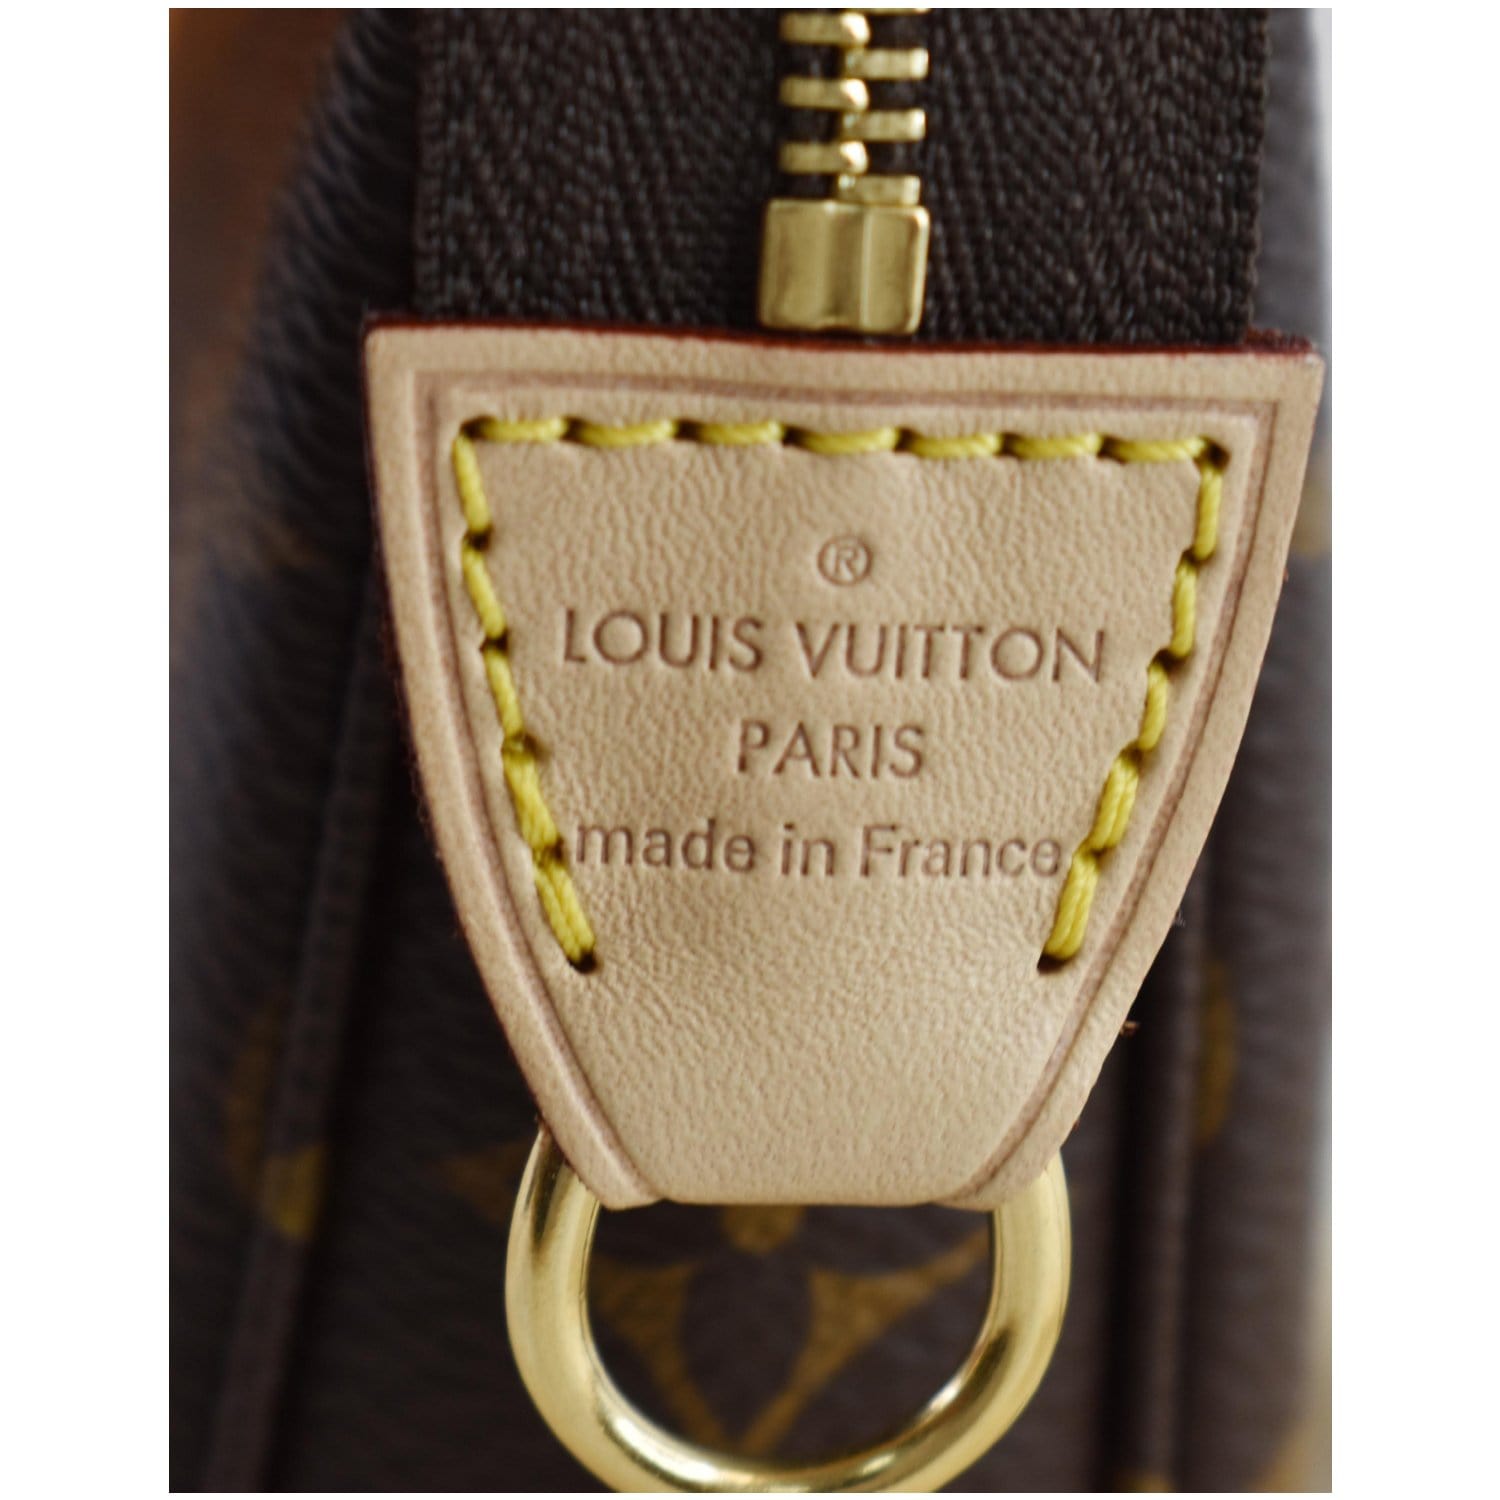 Louis Vuitton Pochette accessories M40712 monogram MADE IN FRANCE